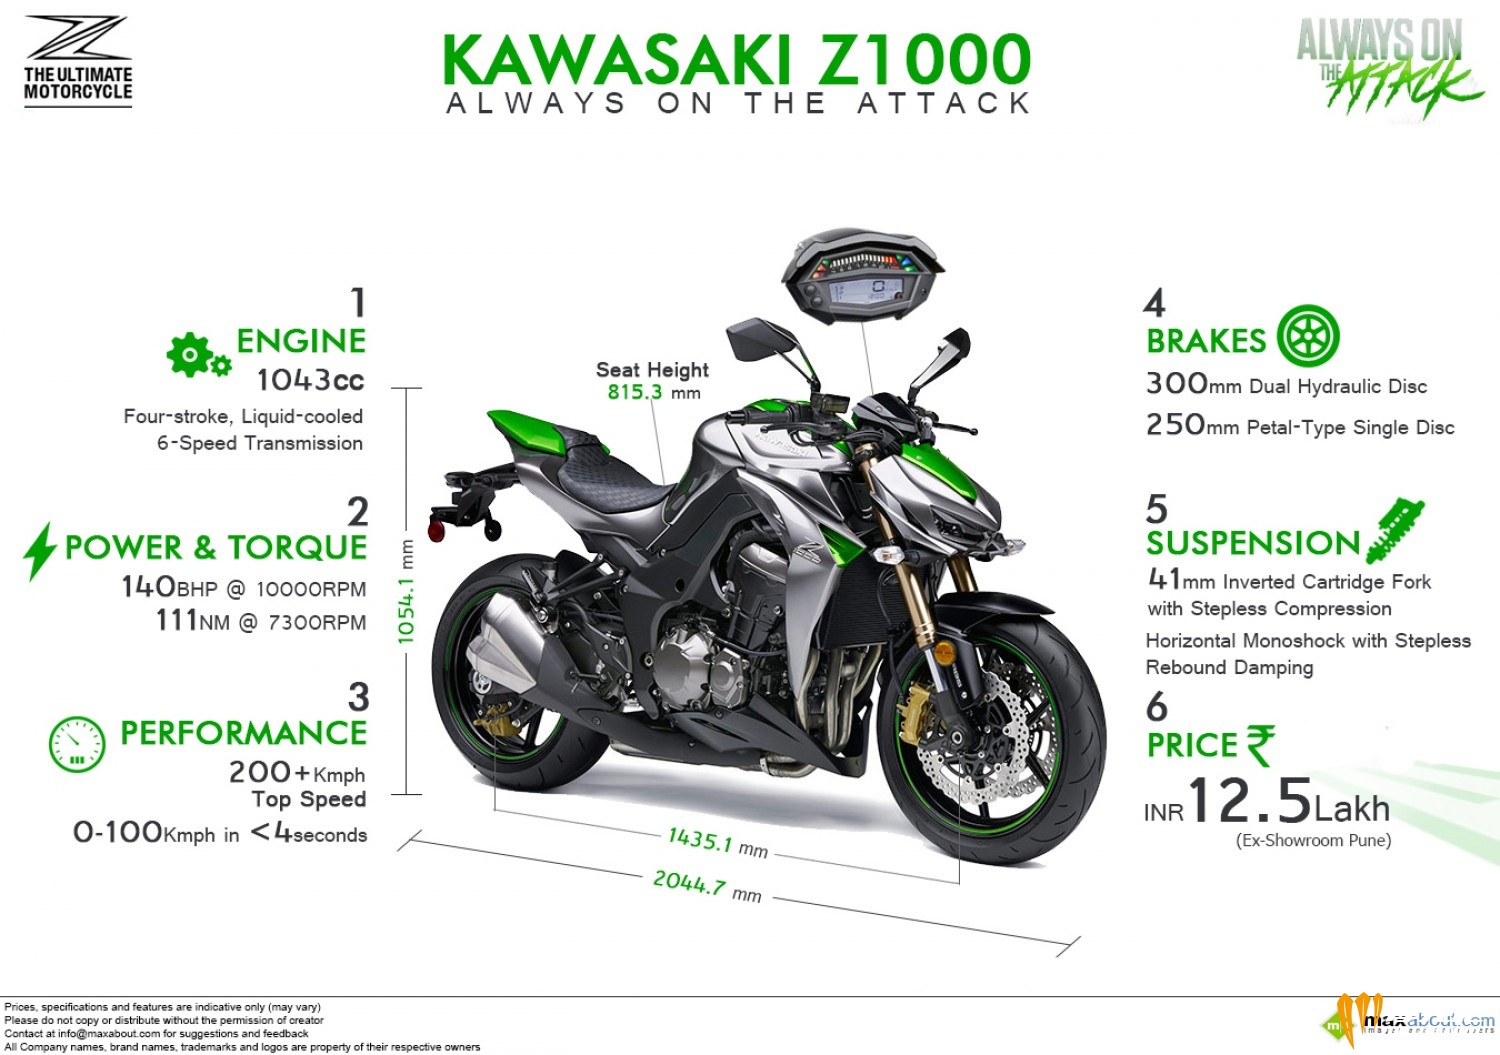 2014-kawasaki-z1000-specifications-and-price_52b8229be25f3_w1500.jpg